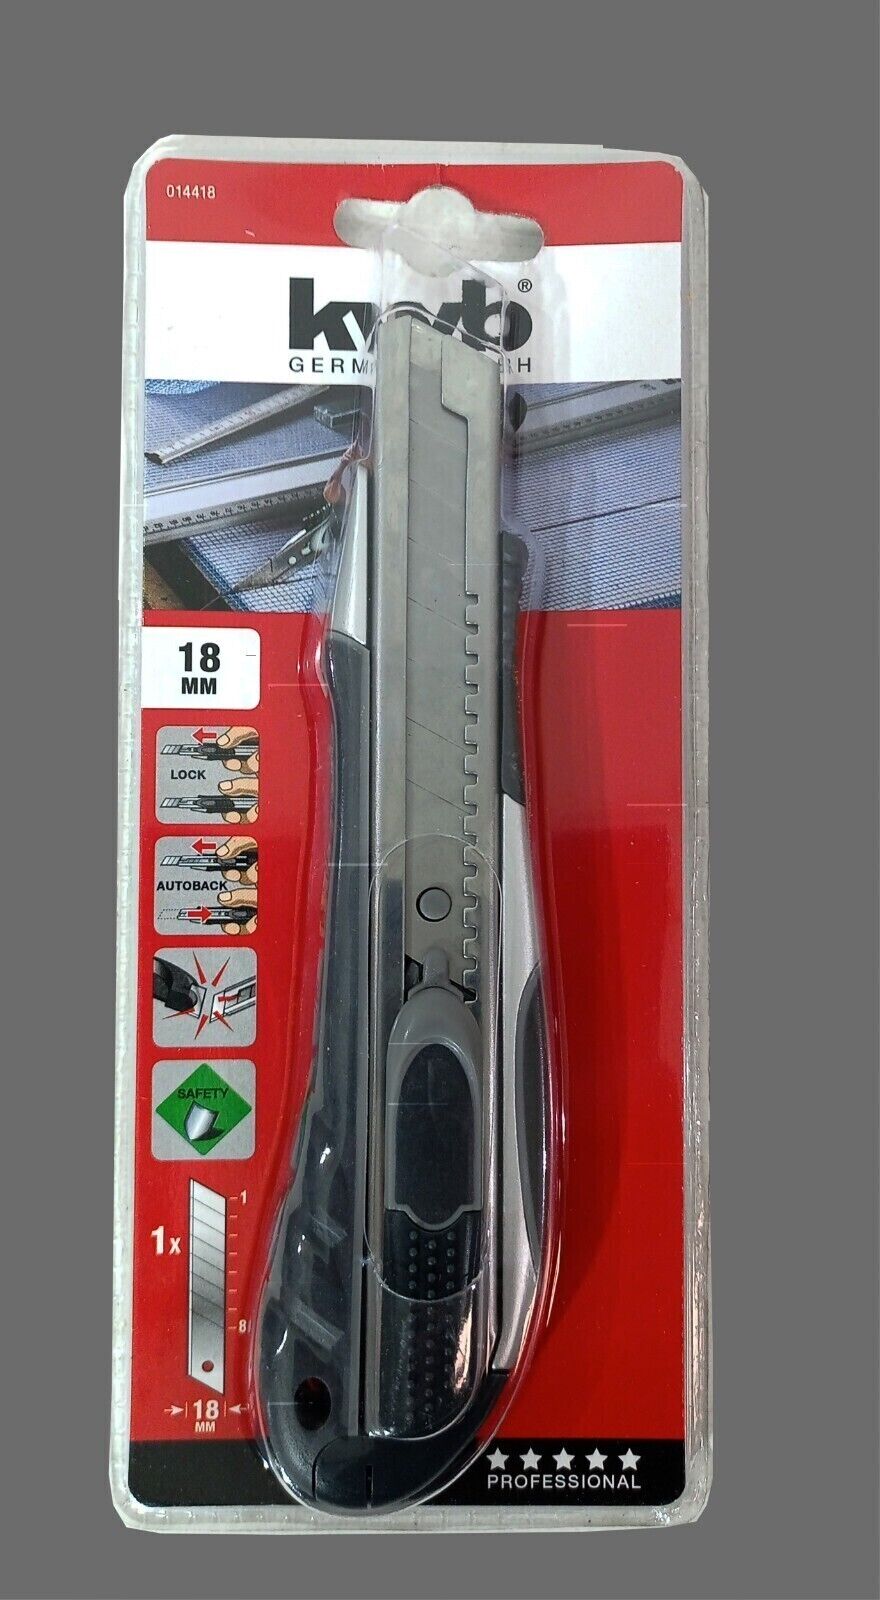 KWB Sicherheits-Abbrechklingenm Autolock Cuttermesser 2 in 1